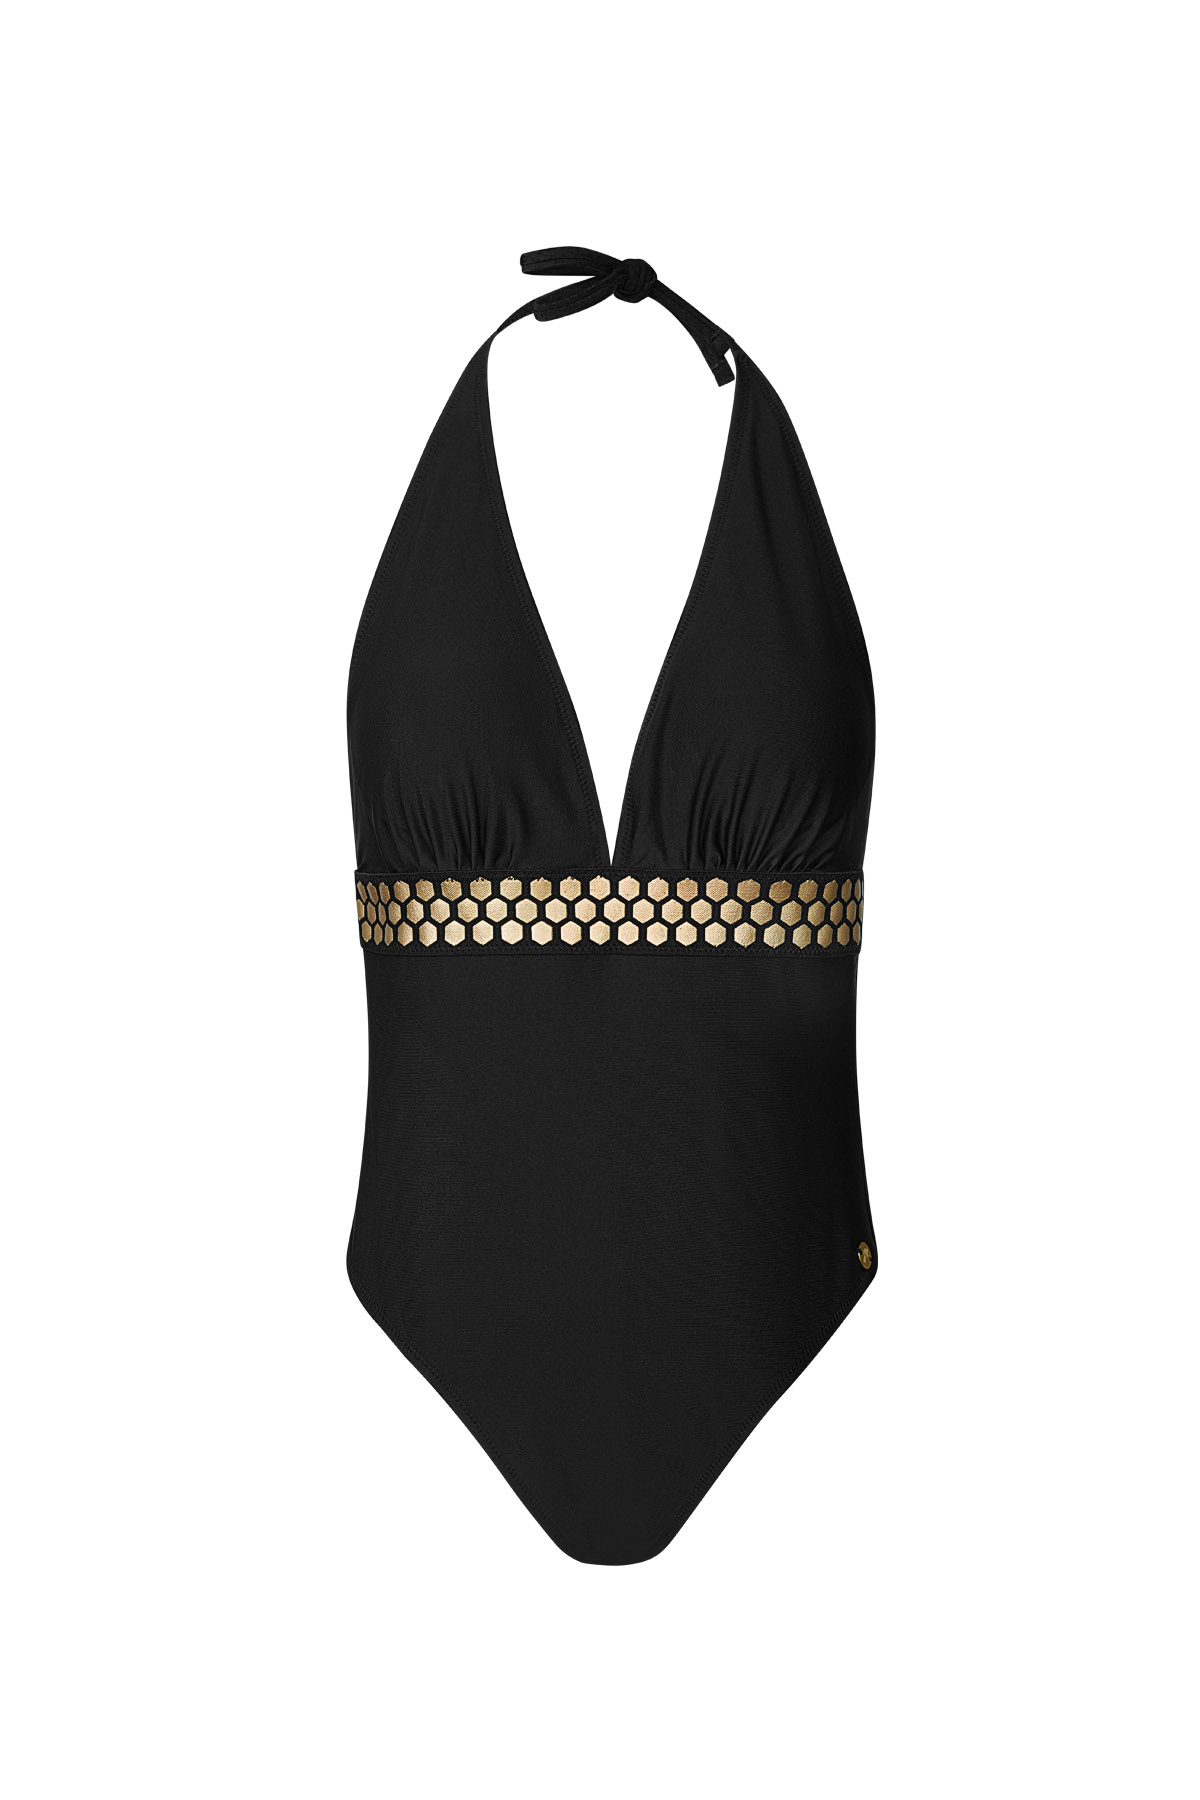 Honeycomb detail swimsuit - black S 